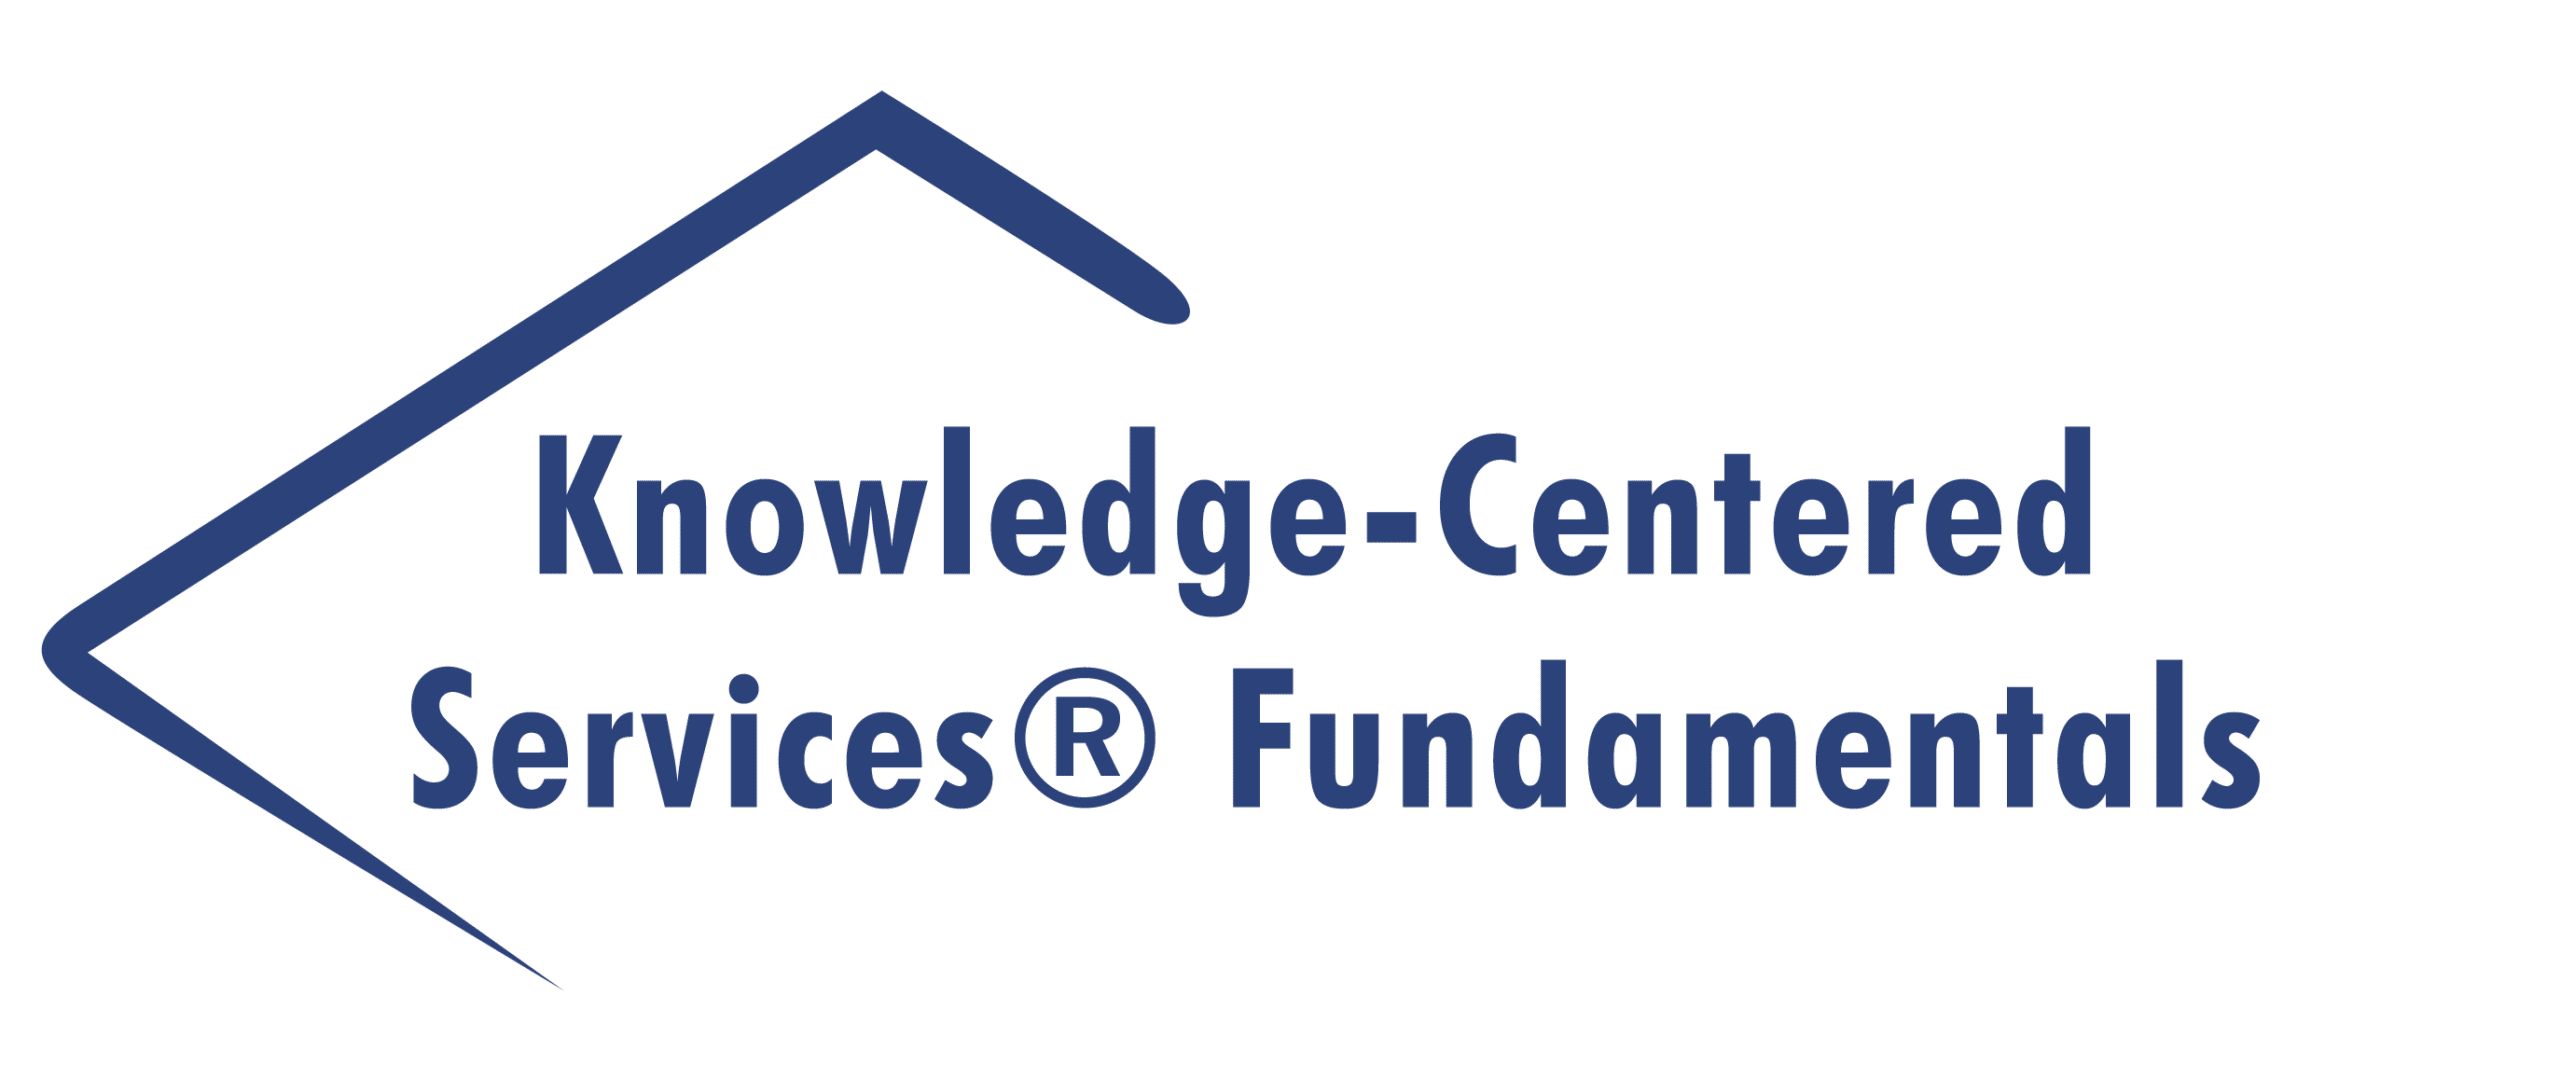 Knowledge-Centered Service v6 Fundamentals